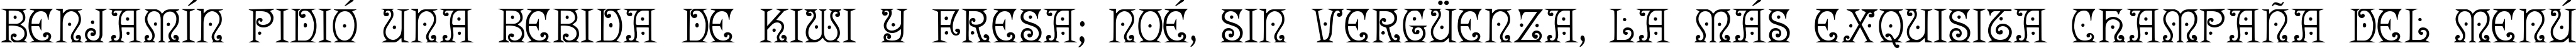 Пример написания шрифтом Angel текста на испанском